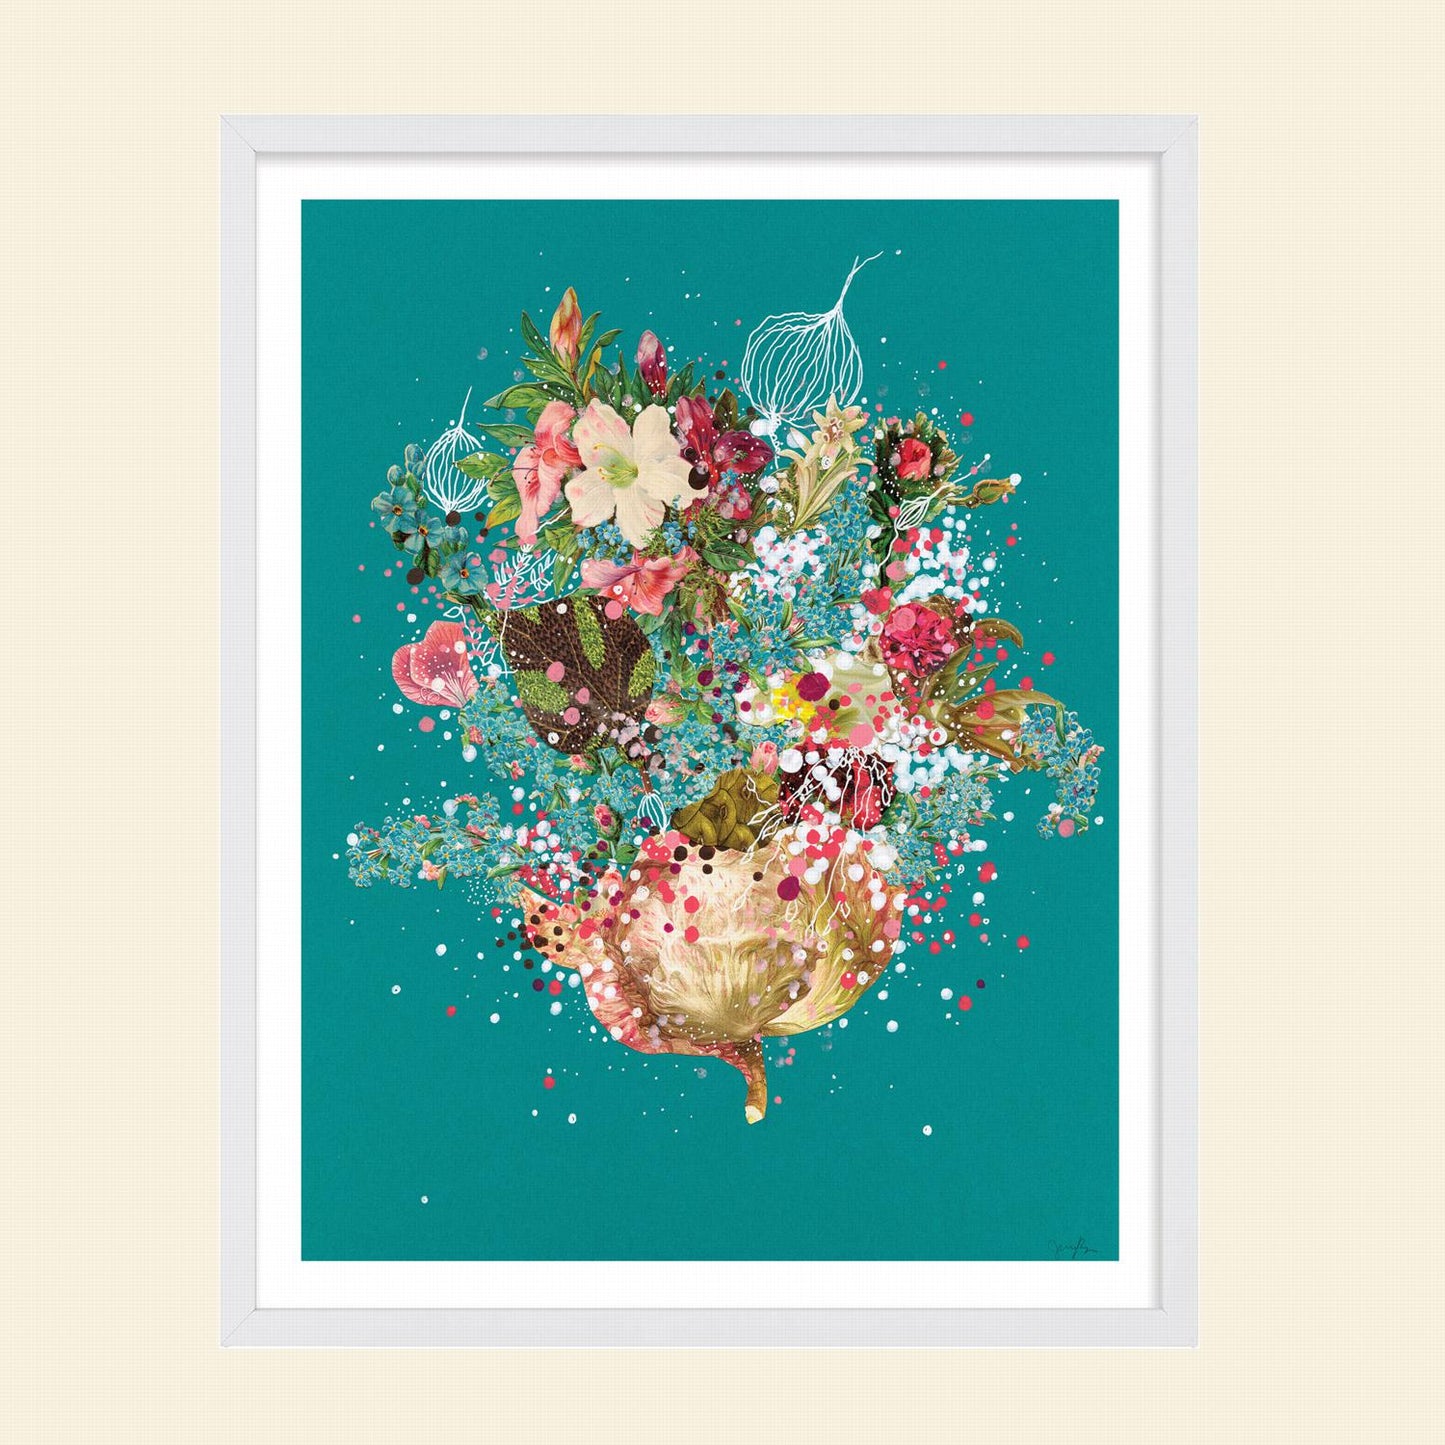 Jenny Brown - "Flowering Sea Lattice"